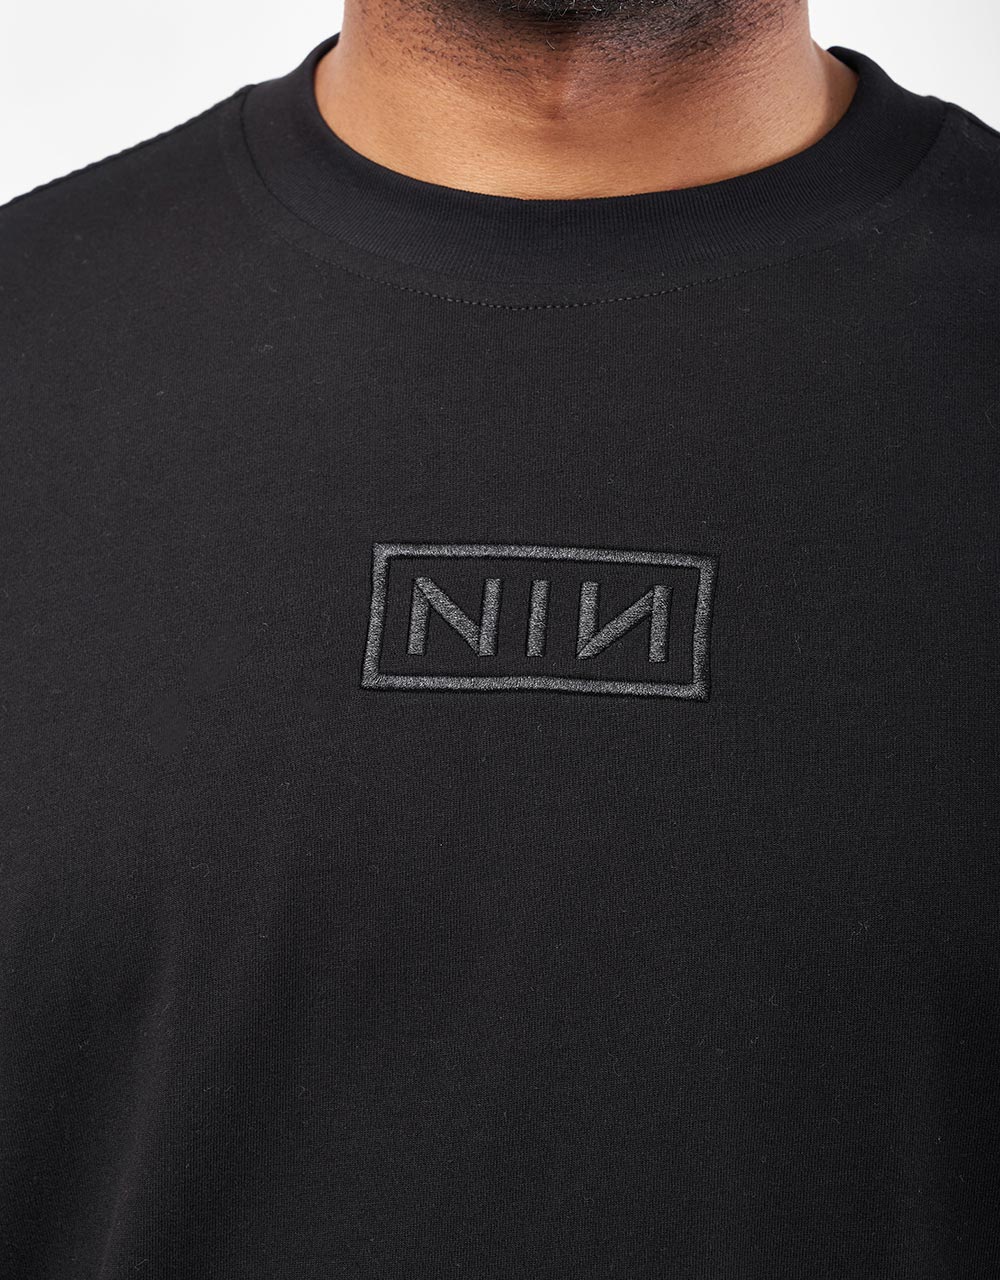 Welcome x Nine Inch Nails Heresy Layered Knit Shirt - Black/Bone